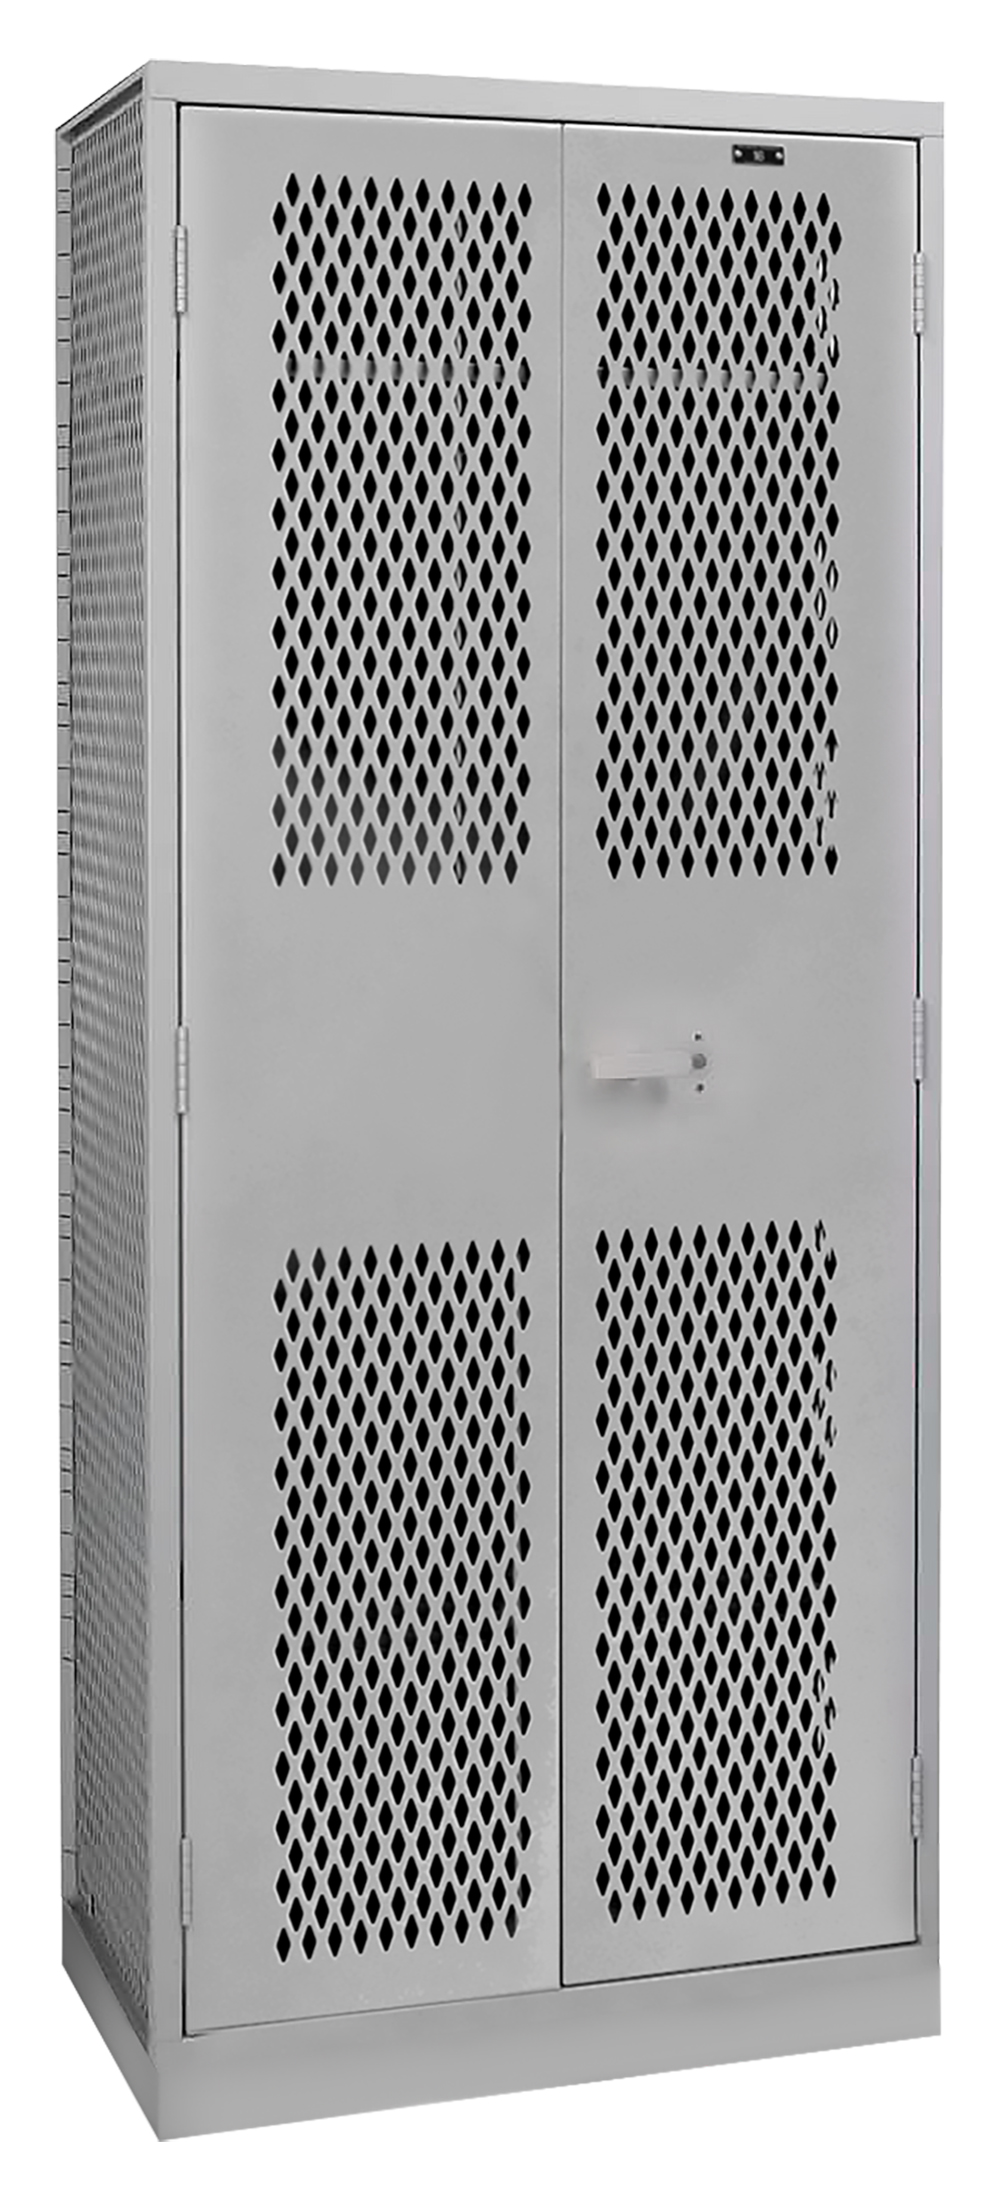 TA-50 Equipment storage locking cabinets